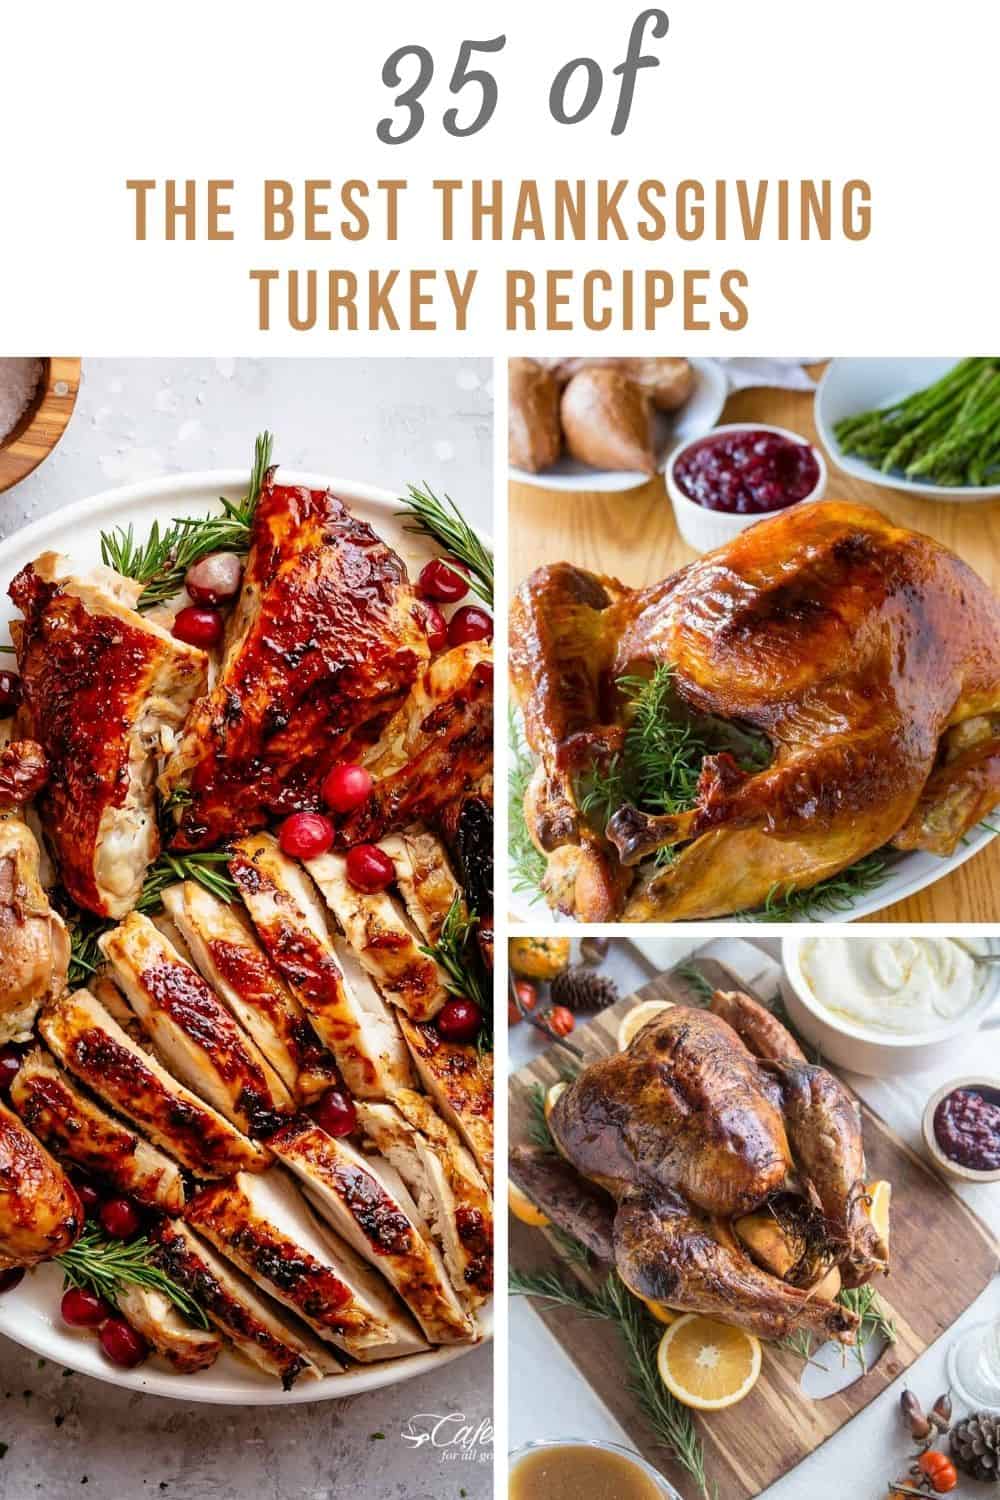 https://www.theroastedroot.net/wp-content/uploads/2020/11/best-thanksgiving-turkey-recipes.jpg